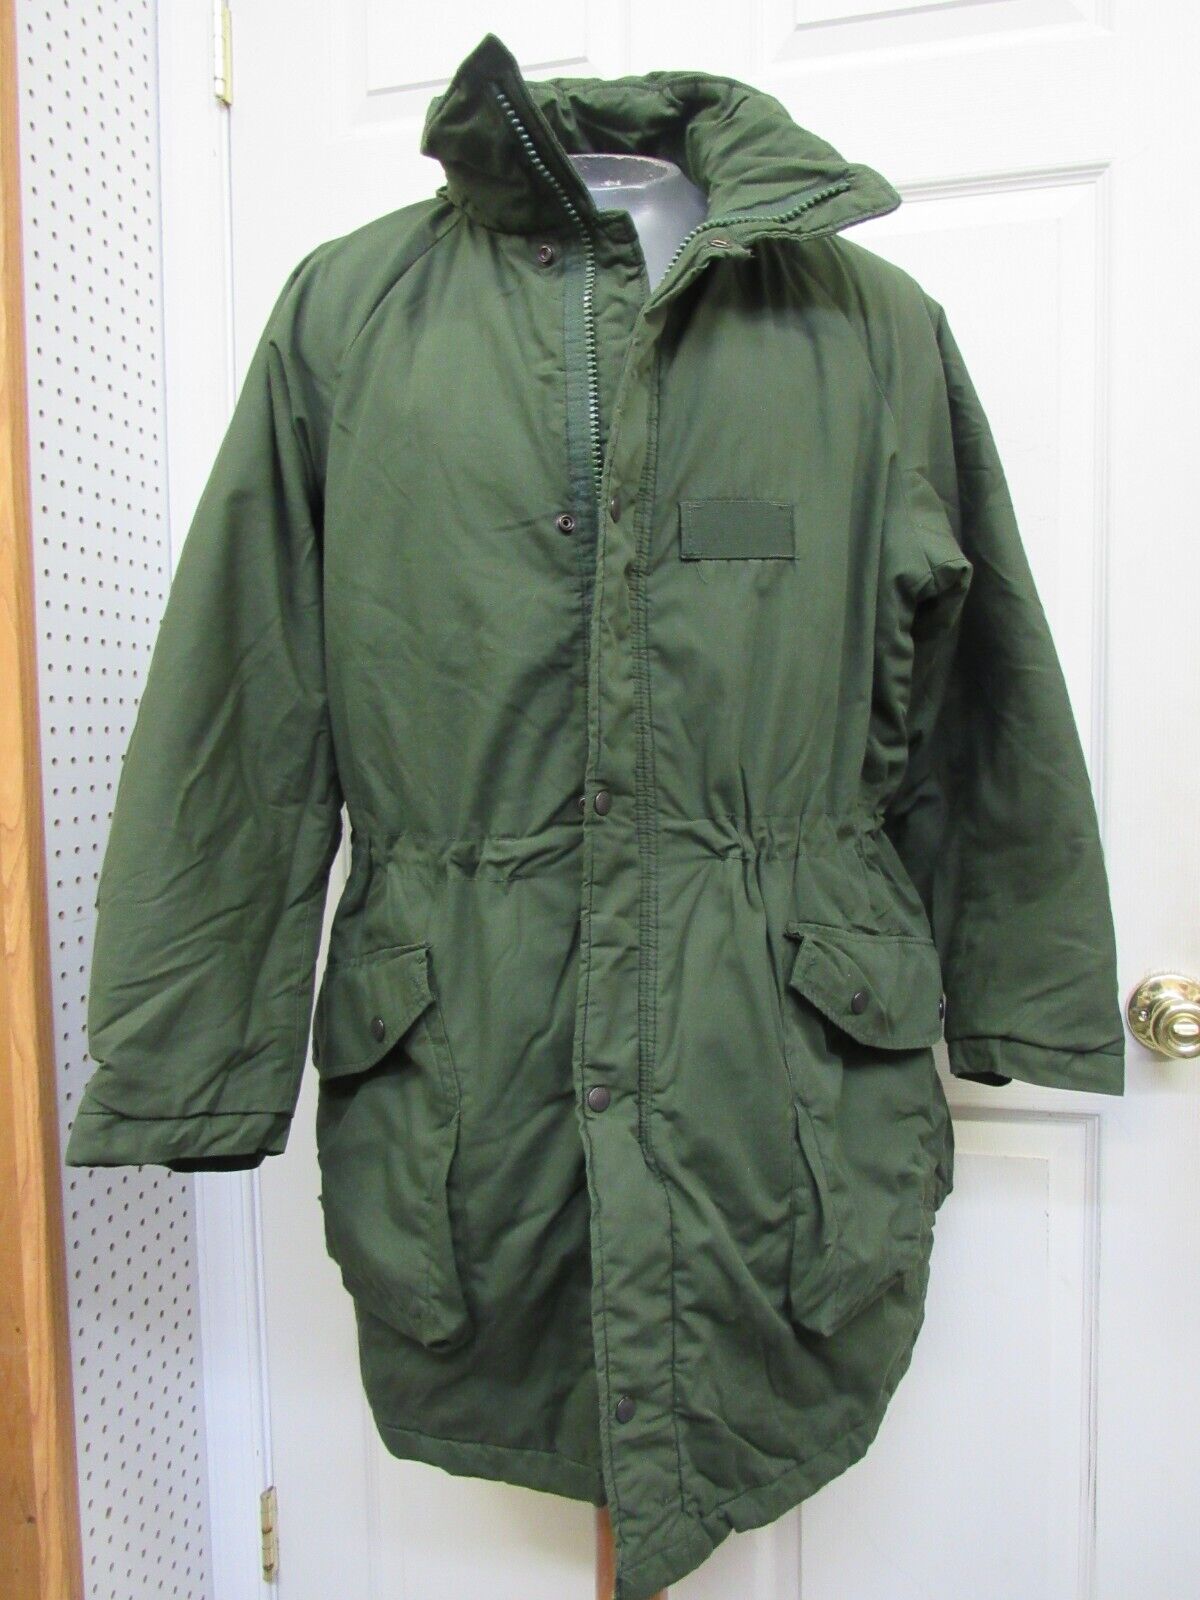 Swedish Army M90 Parka Insulated Winter Jacket Coat 1992 Dated 170/65 Original